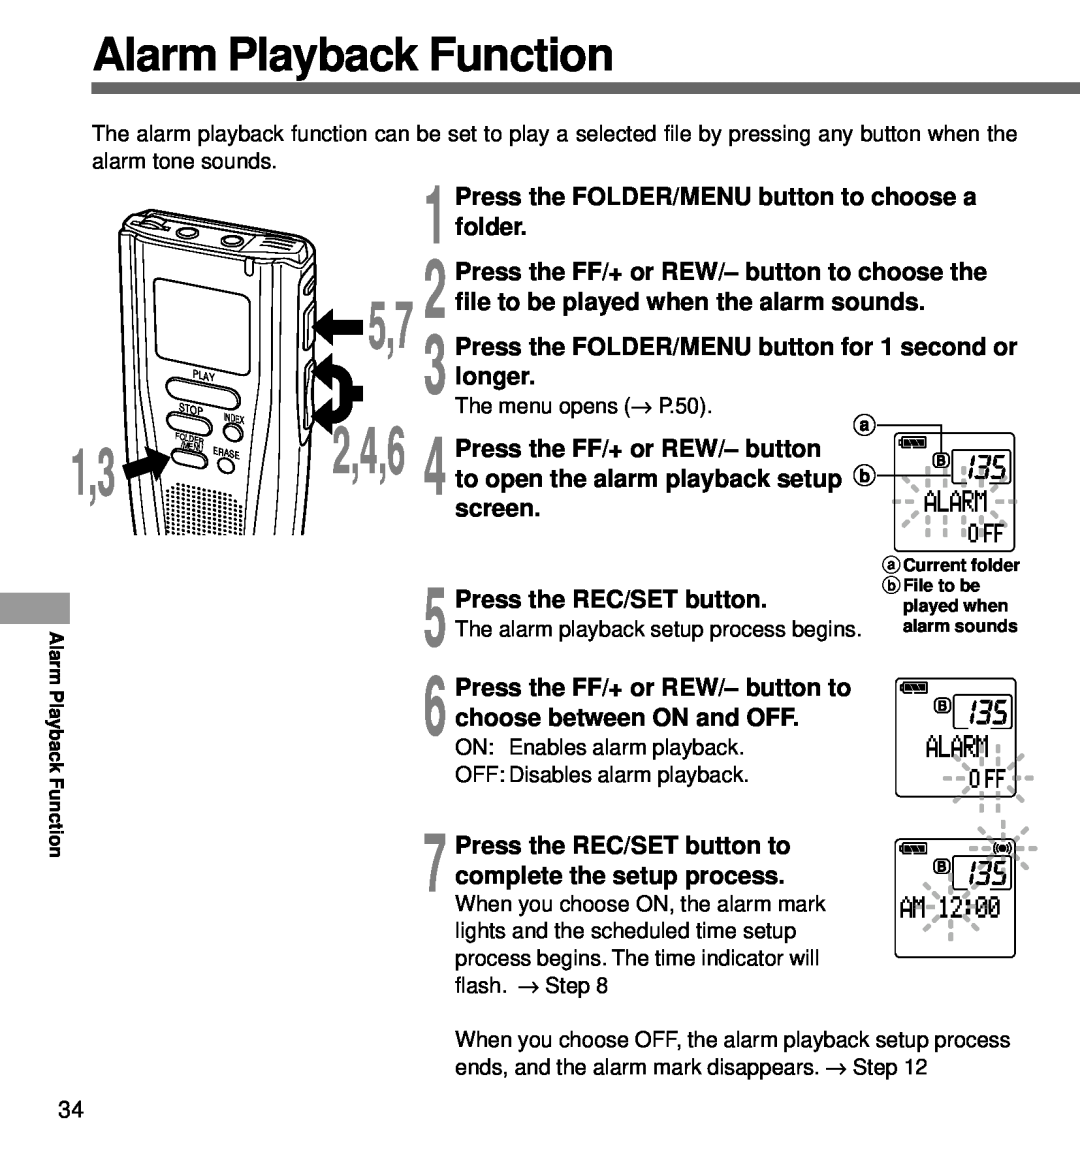 Olympus DS-3000 Alarm Playback Function, 2,4,6, Press the FOLDER/MENU button to choose a folder, Stop, Folder, Menu, Erase 